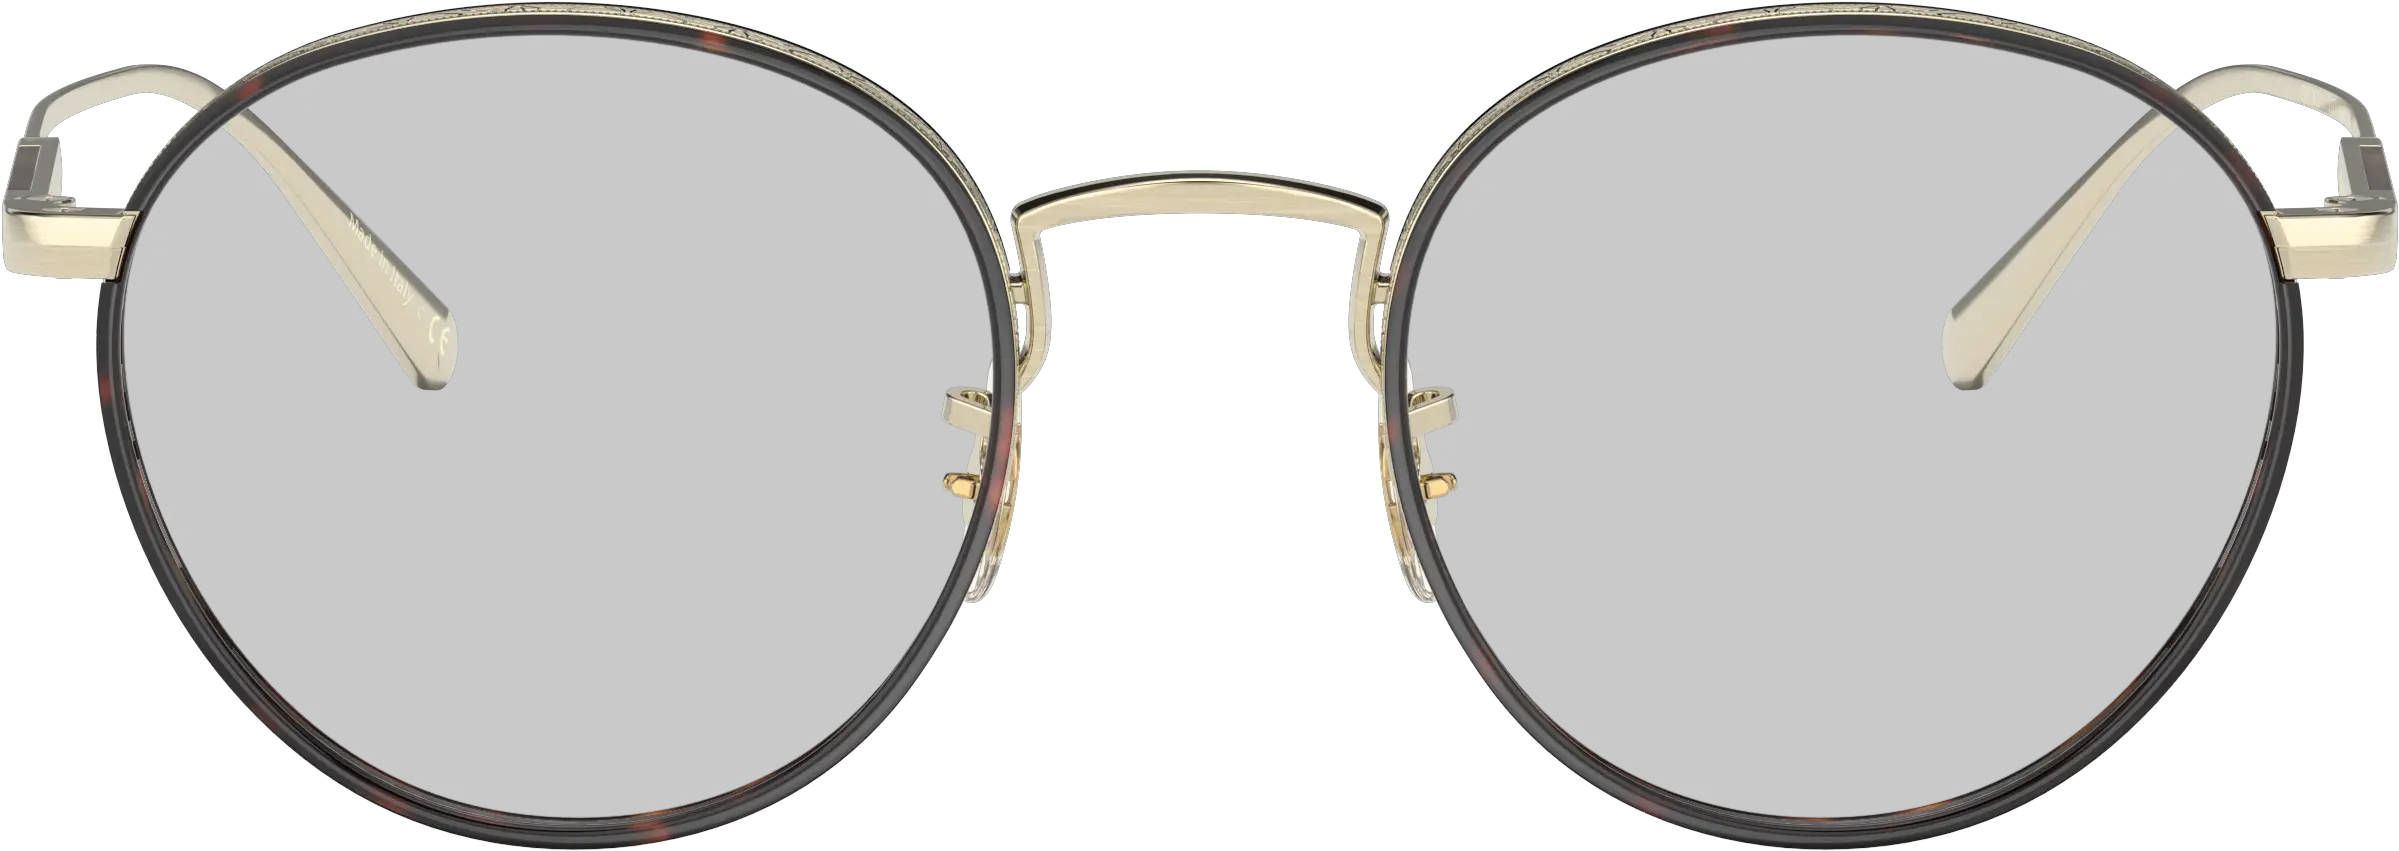 Oliver Artemio R Eyeglasses In Brushed Golddark Mahogany Salomon Png Silhouette Glasses Tma Icon